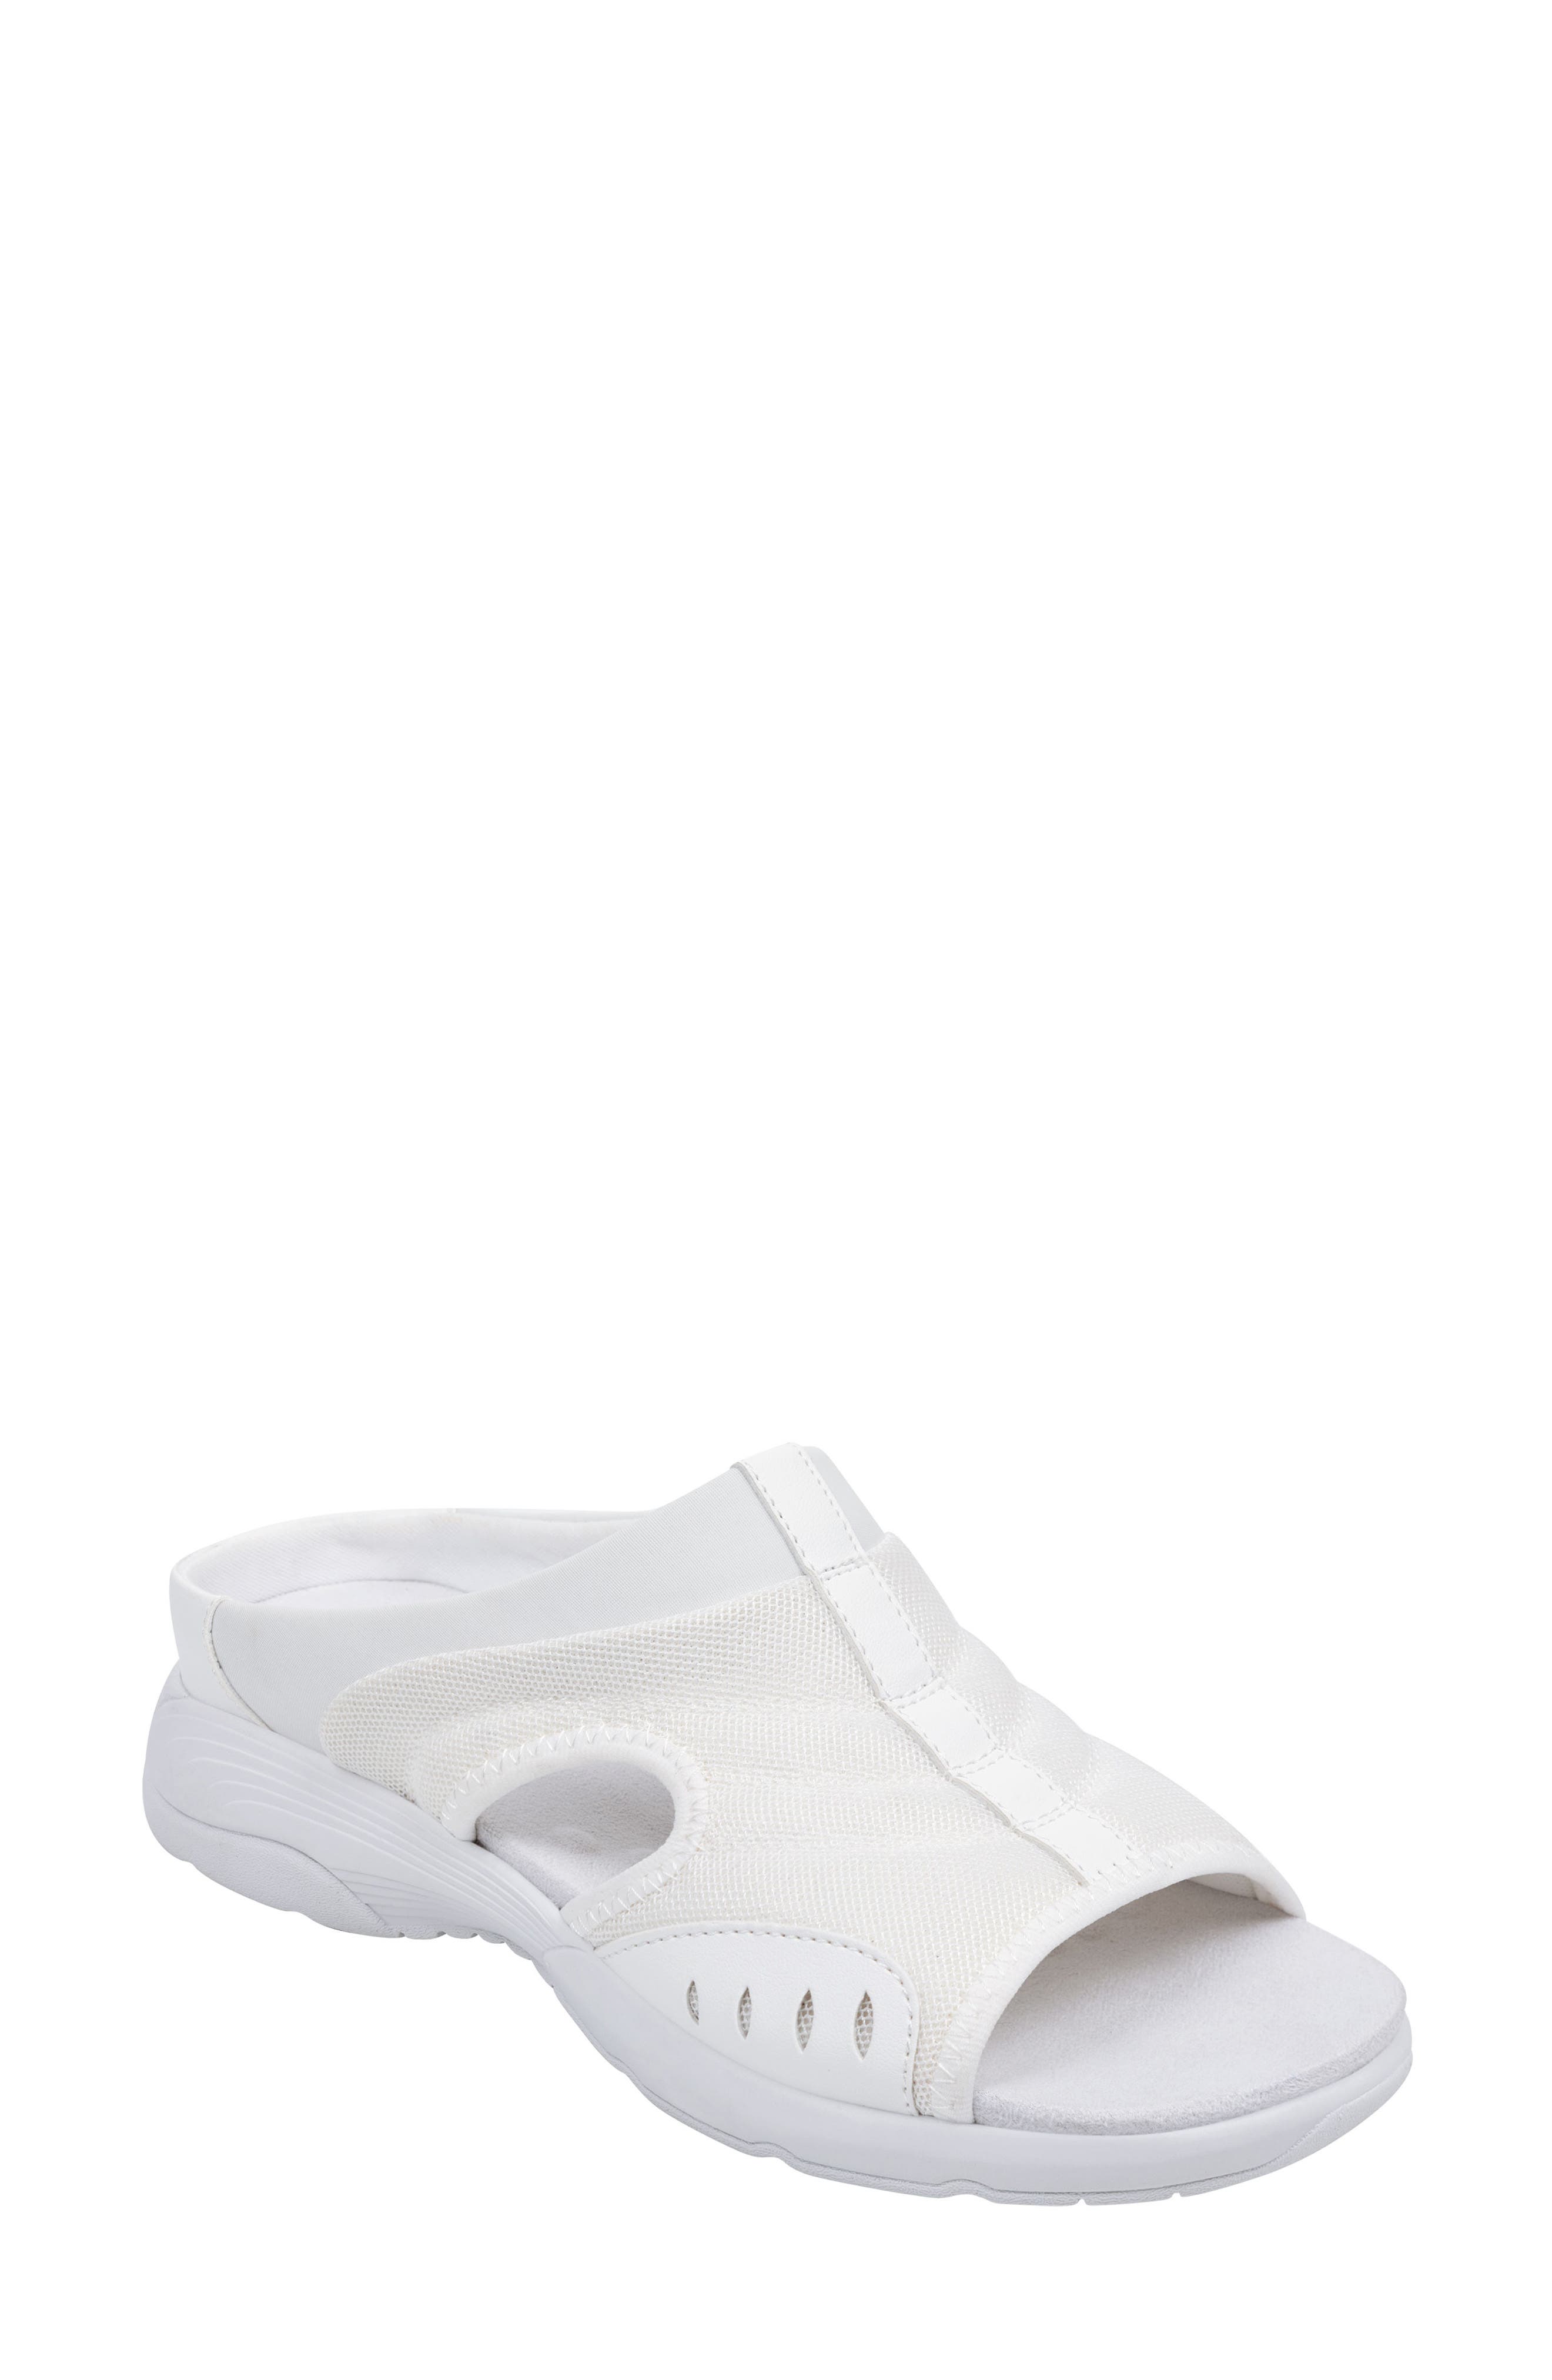 UPC 192733303838 product image for Women's Easy Spirit Traciee Sandal, Size 10 W - White | upcitemdb.com